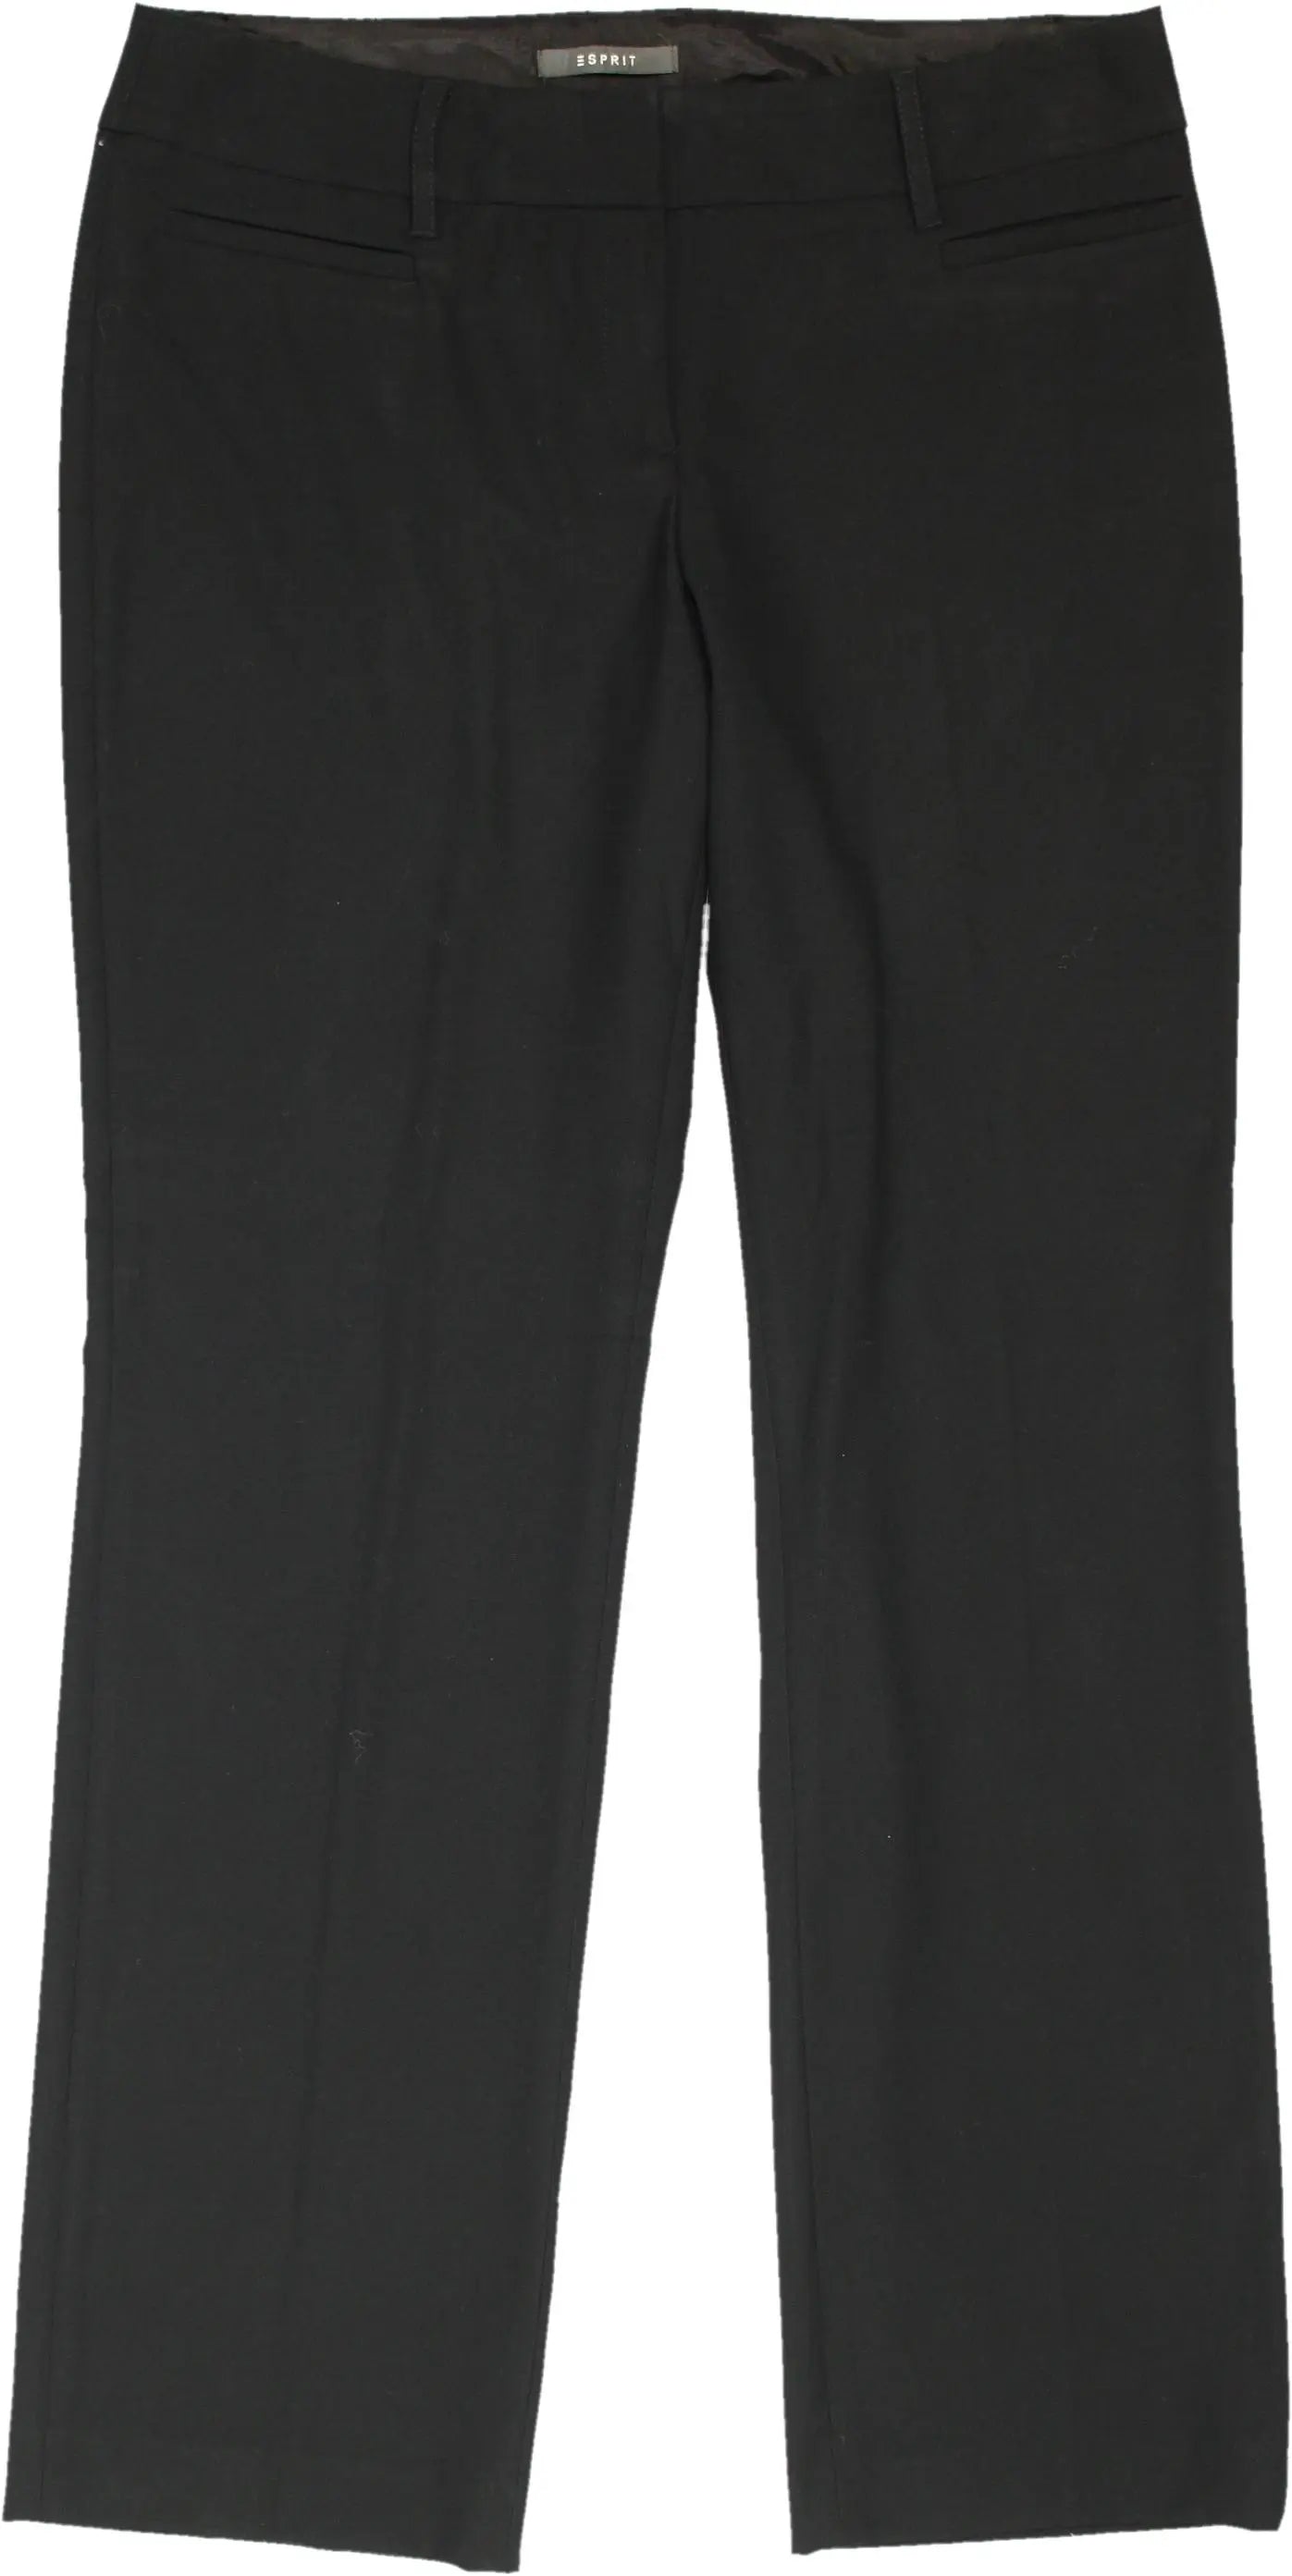 Esprit - Black Pants- ThriftTale.com - Vintage and second handclothing